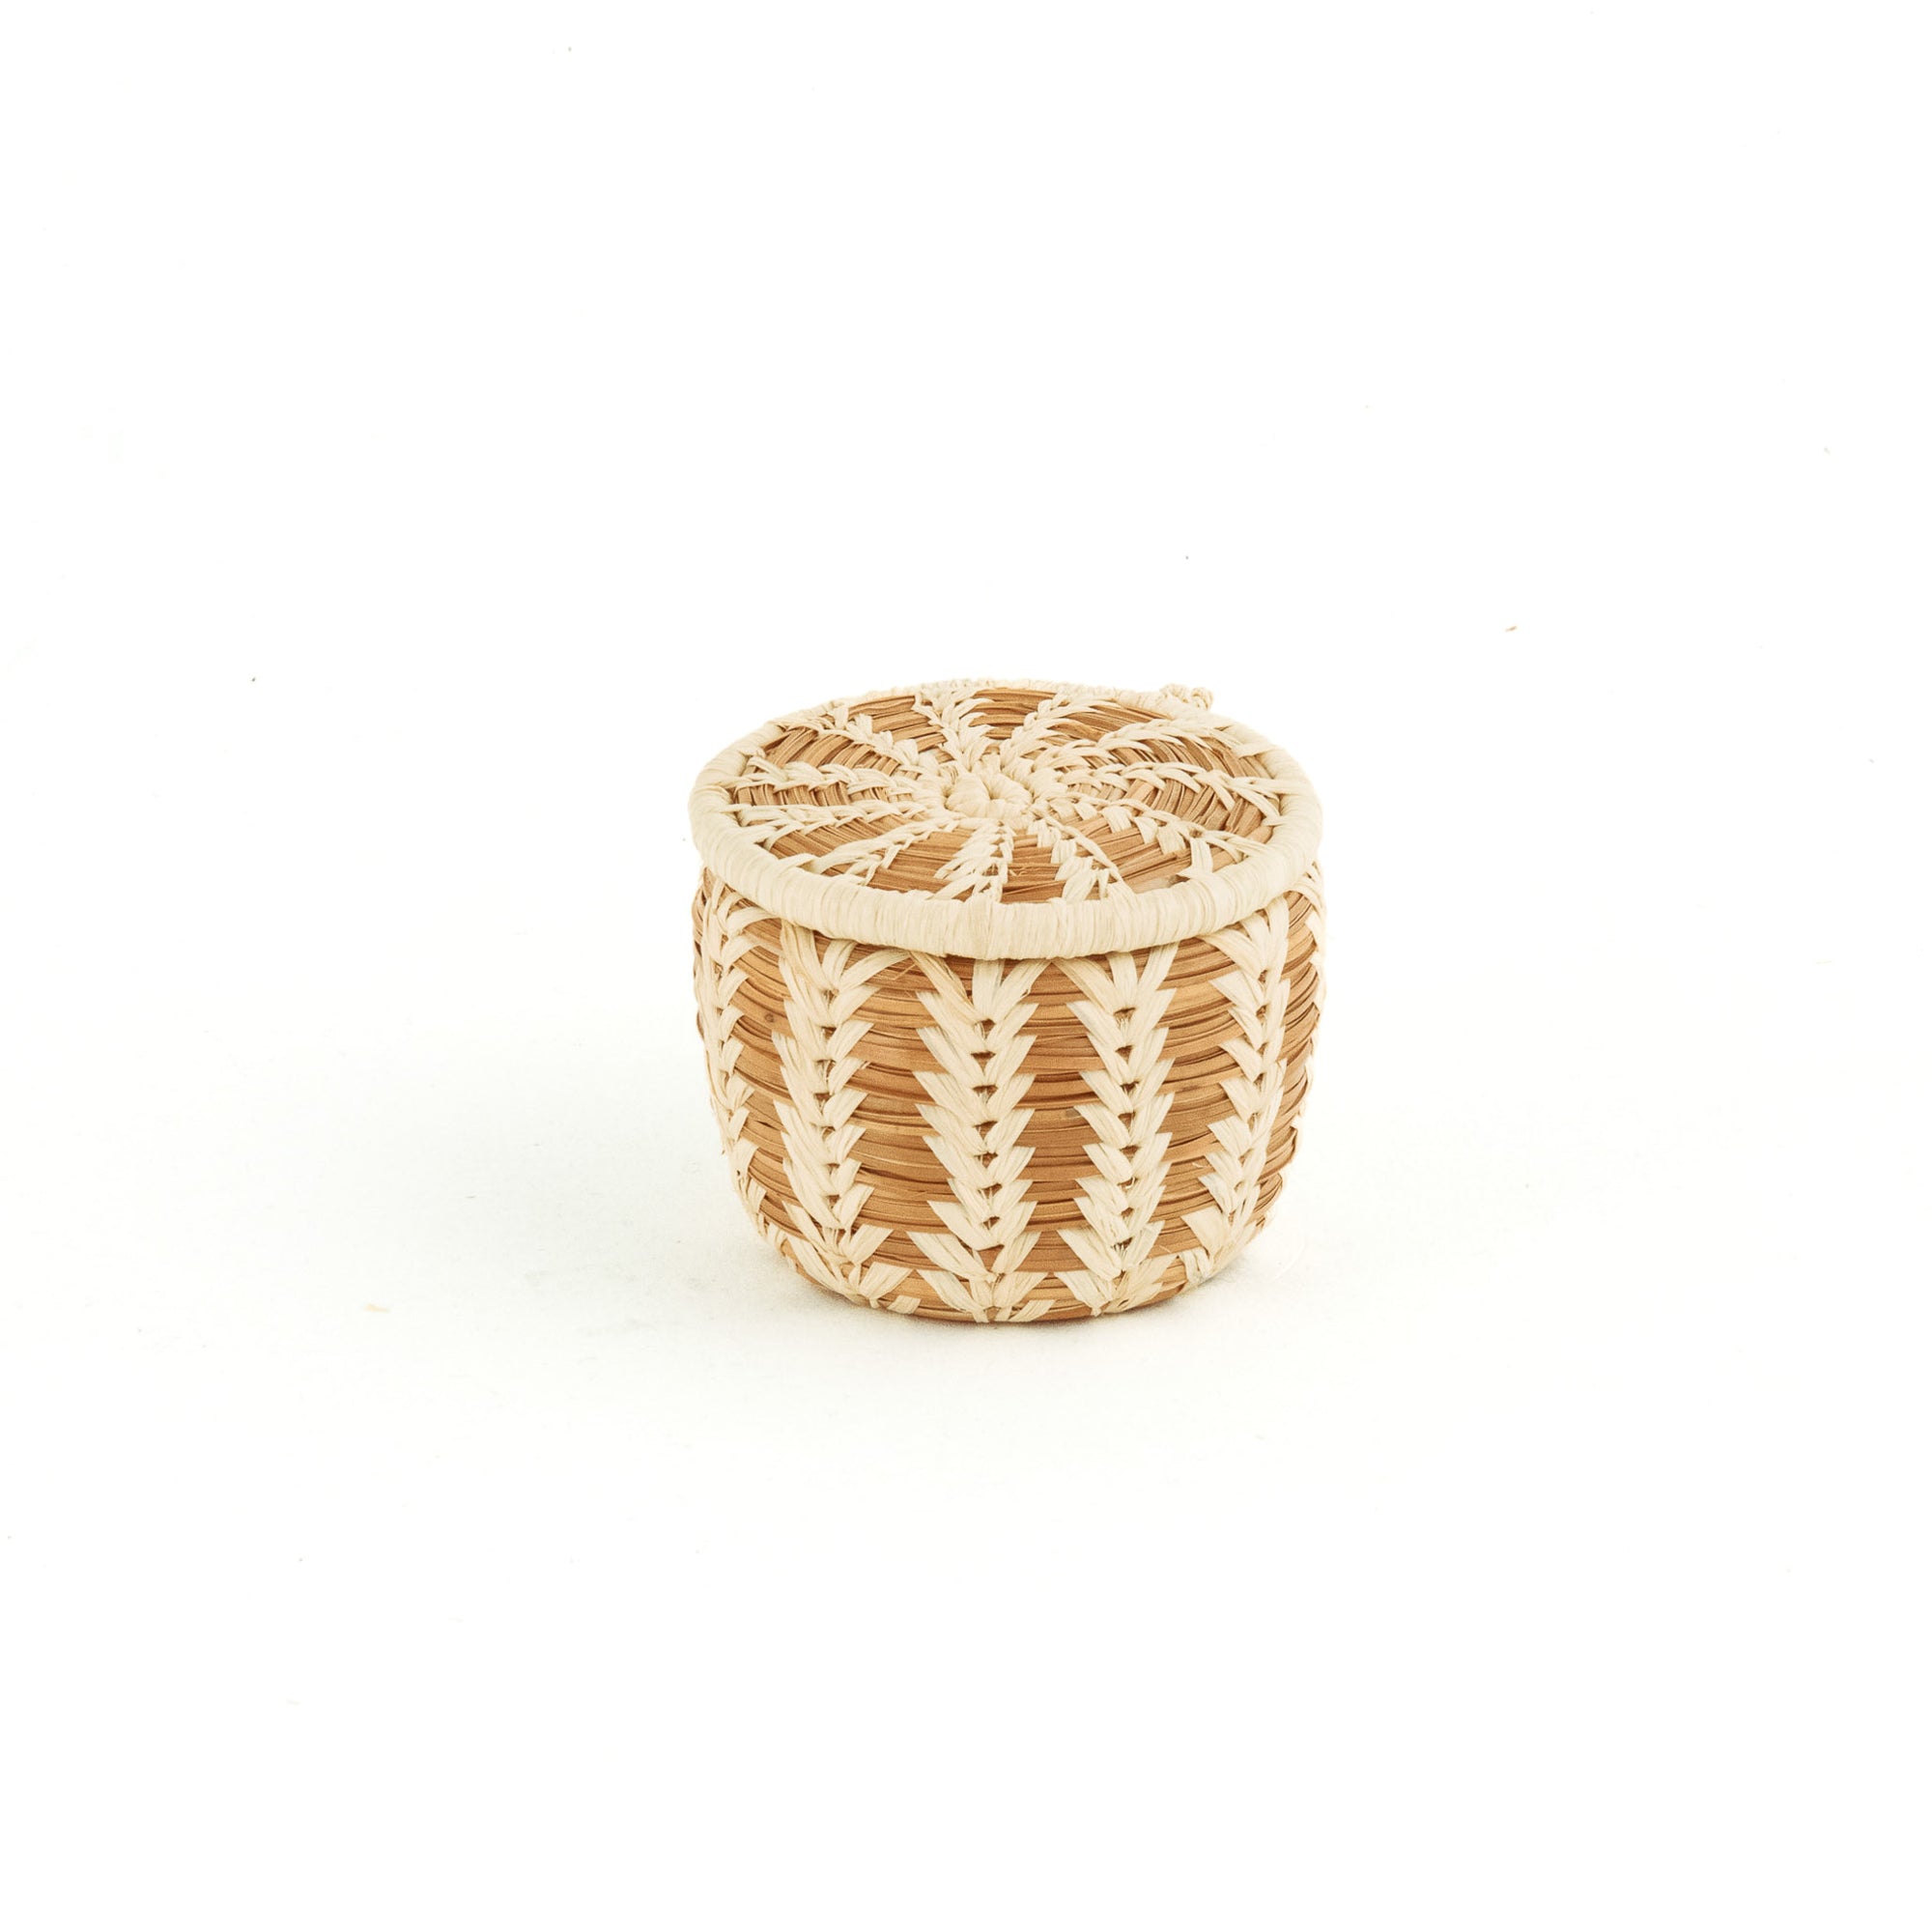 Miniature Pine Needle Basket with Lid